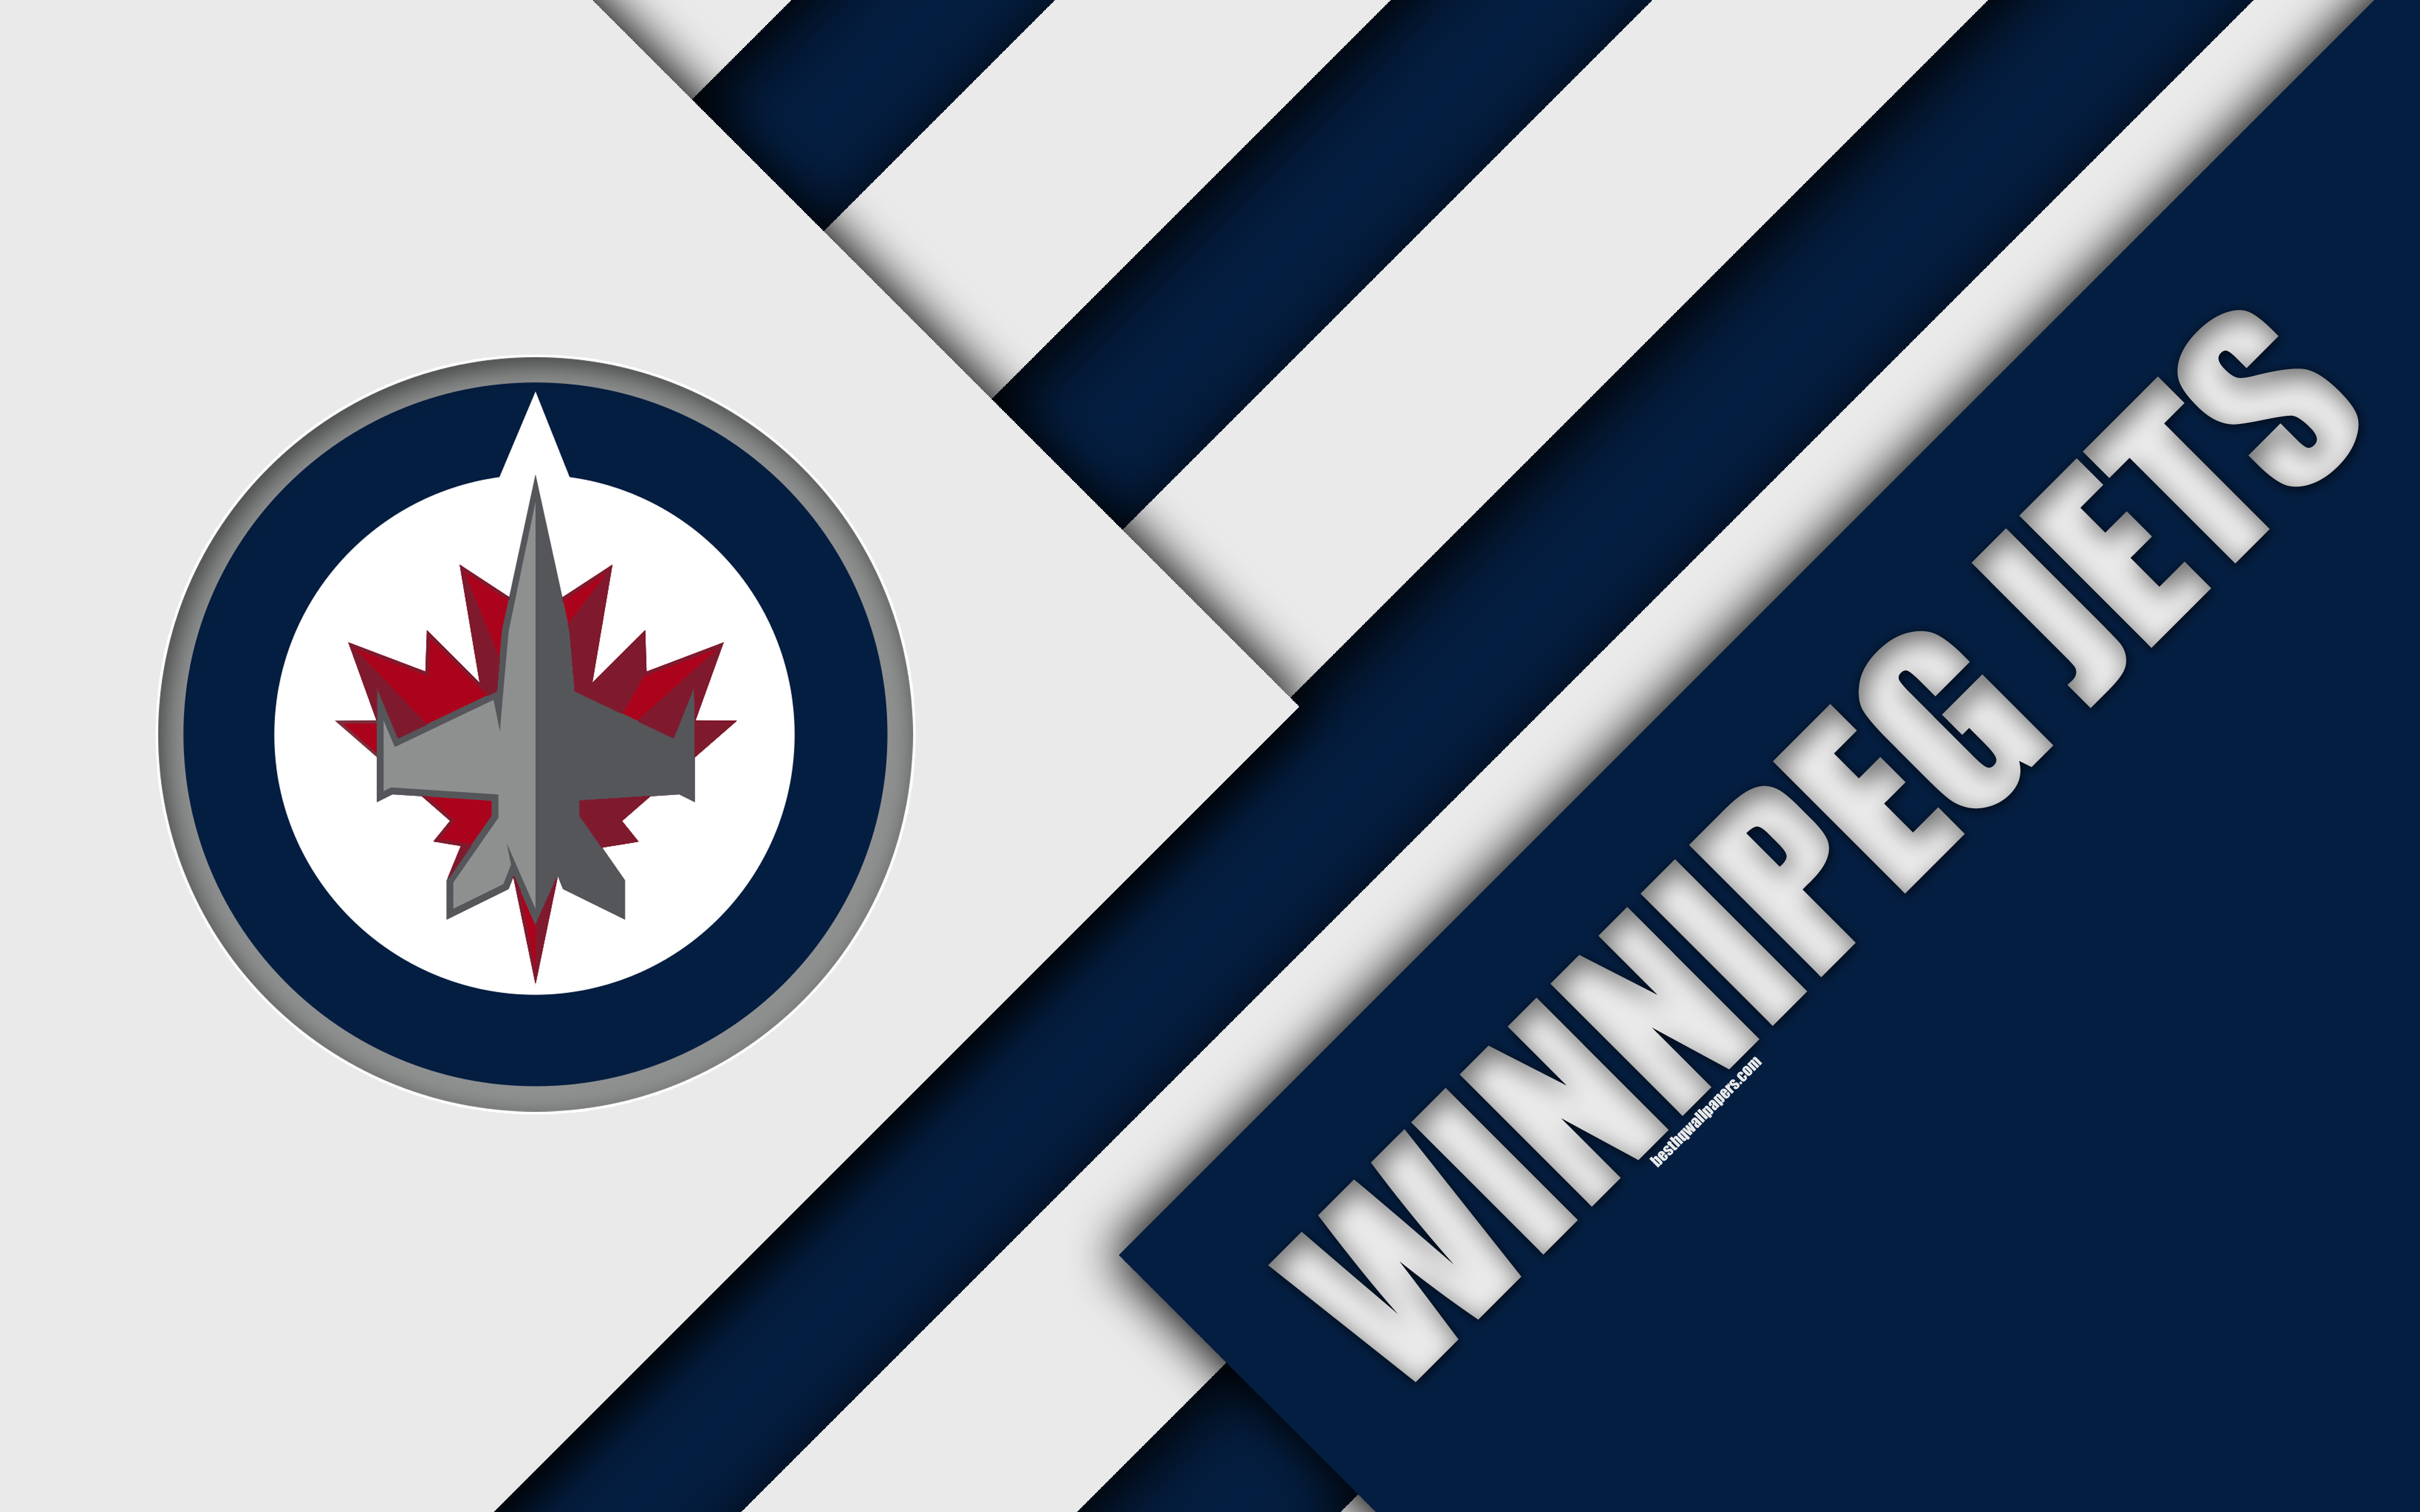 Winnipeg Jets on X: Some impromptu wallpapers for you, #NHLJets